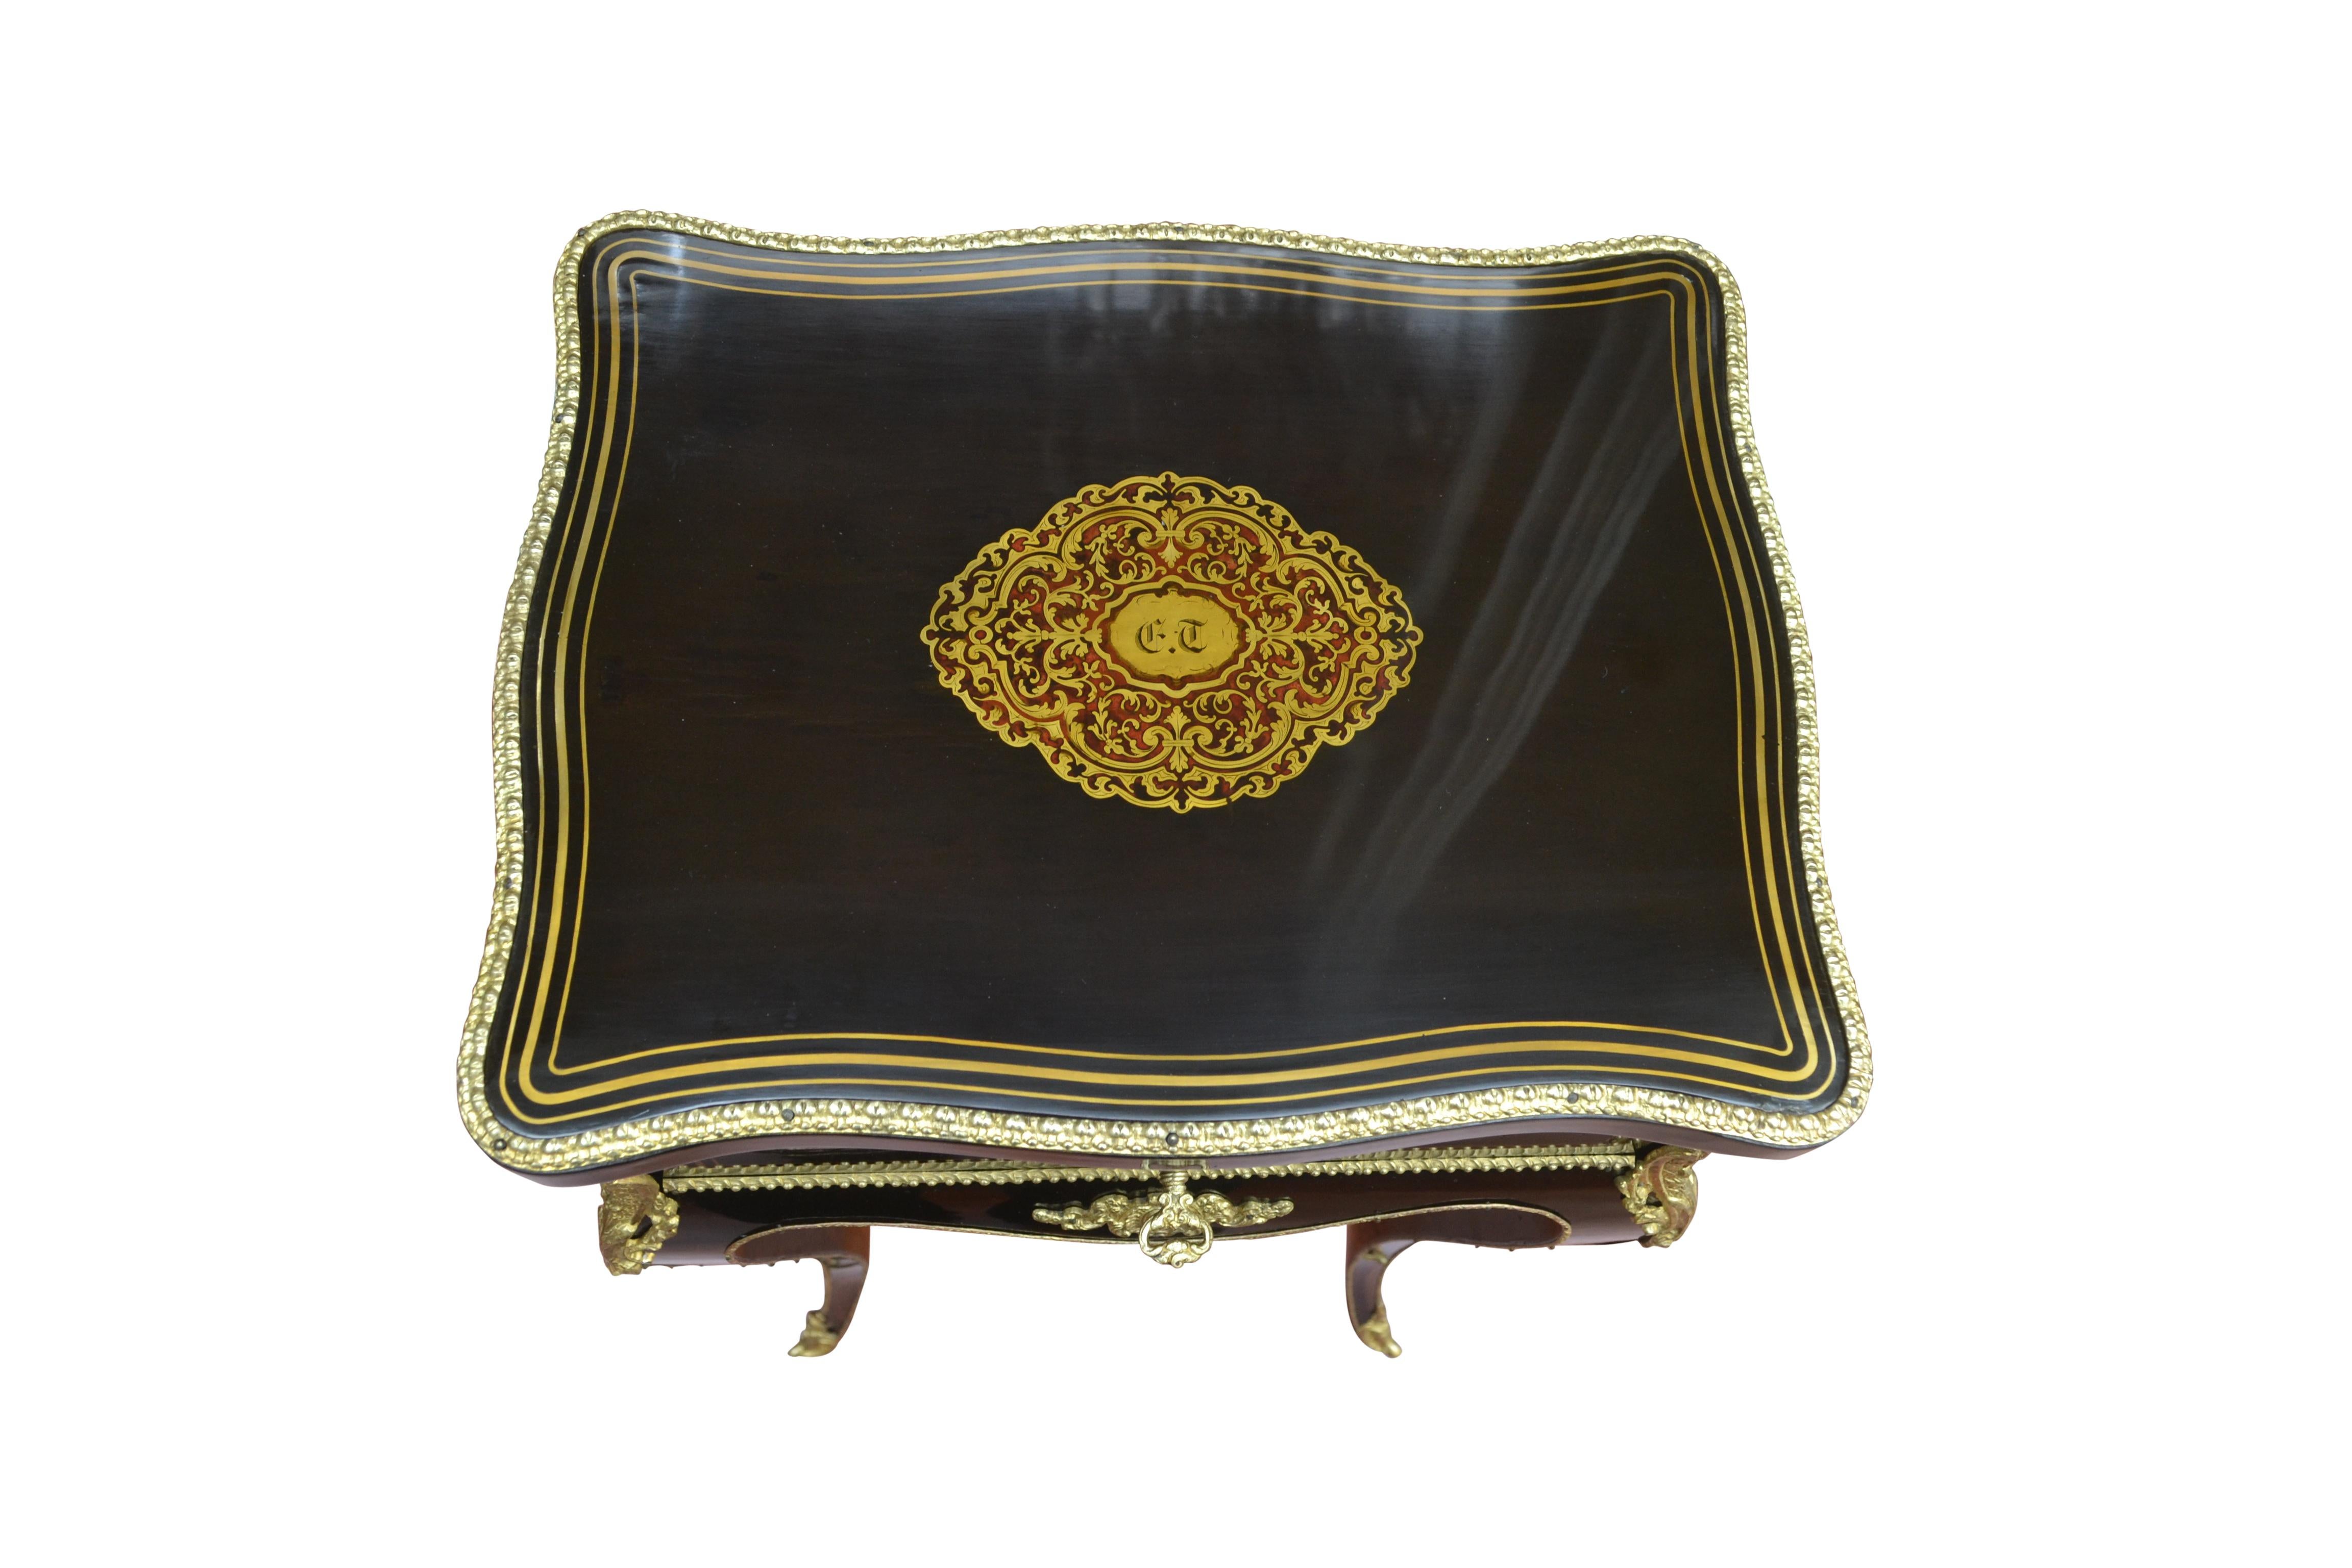 Napoleon III Ebonized Wood, Brass Inlay and Ormolu Jewelry Table by Tahan 1